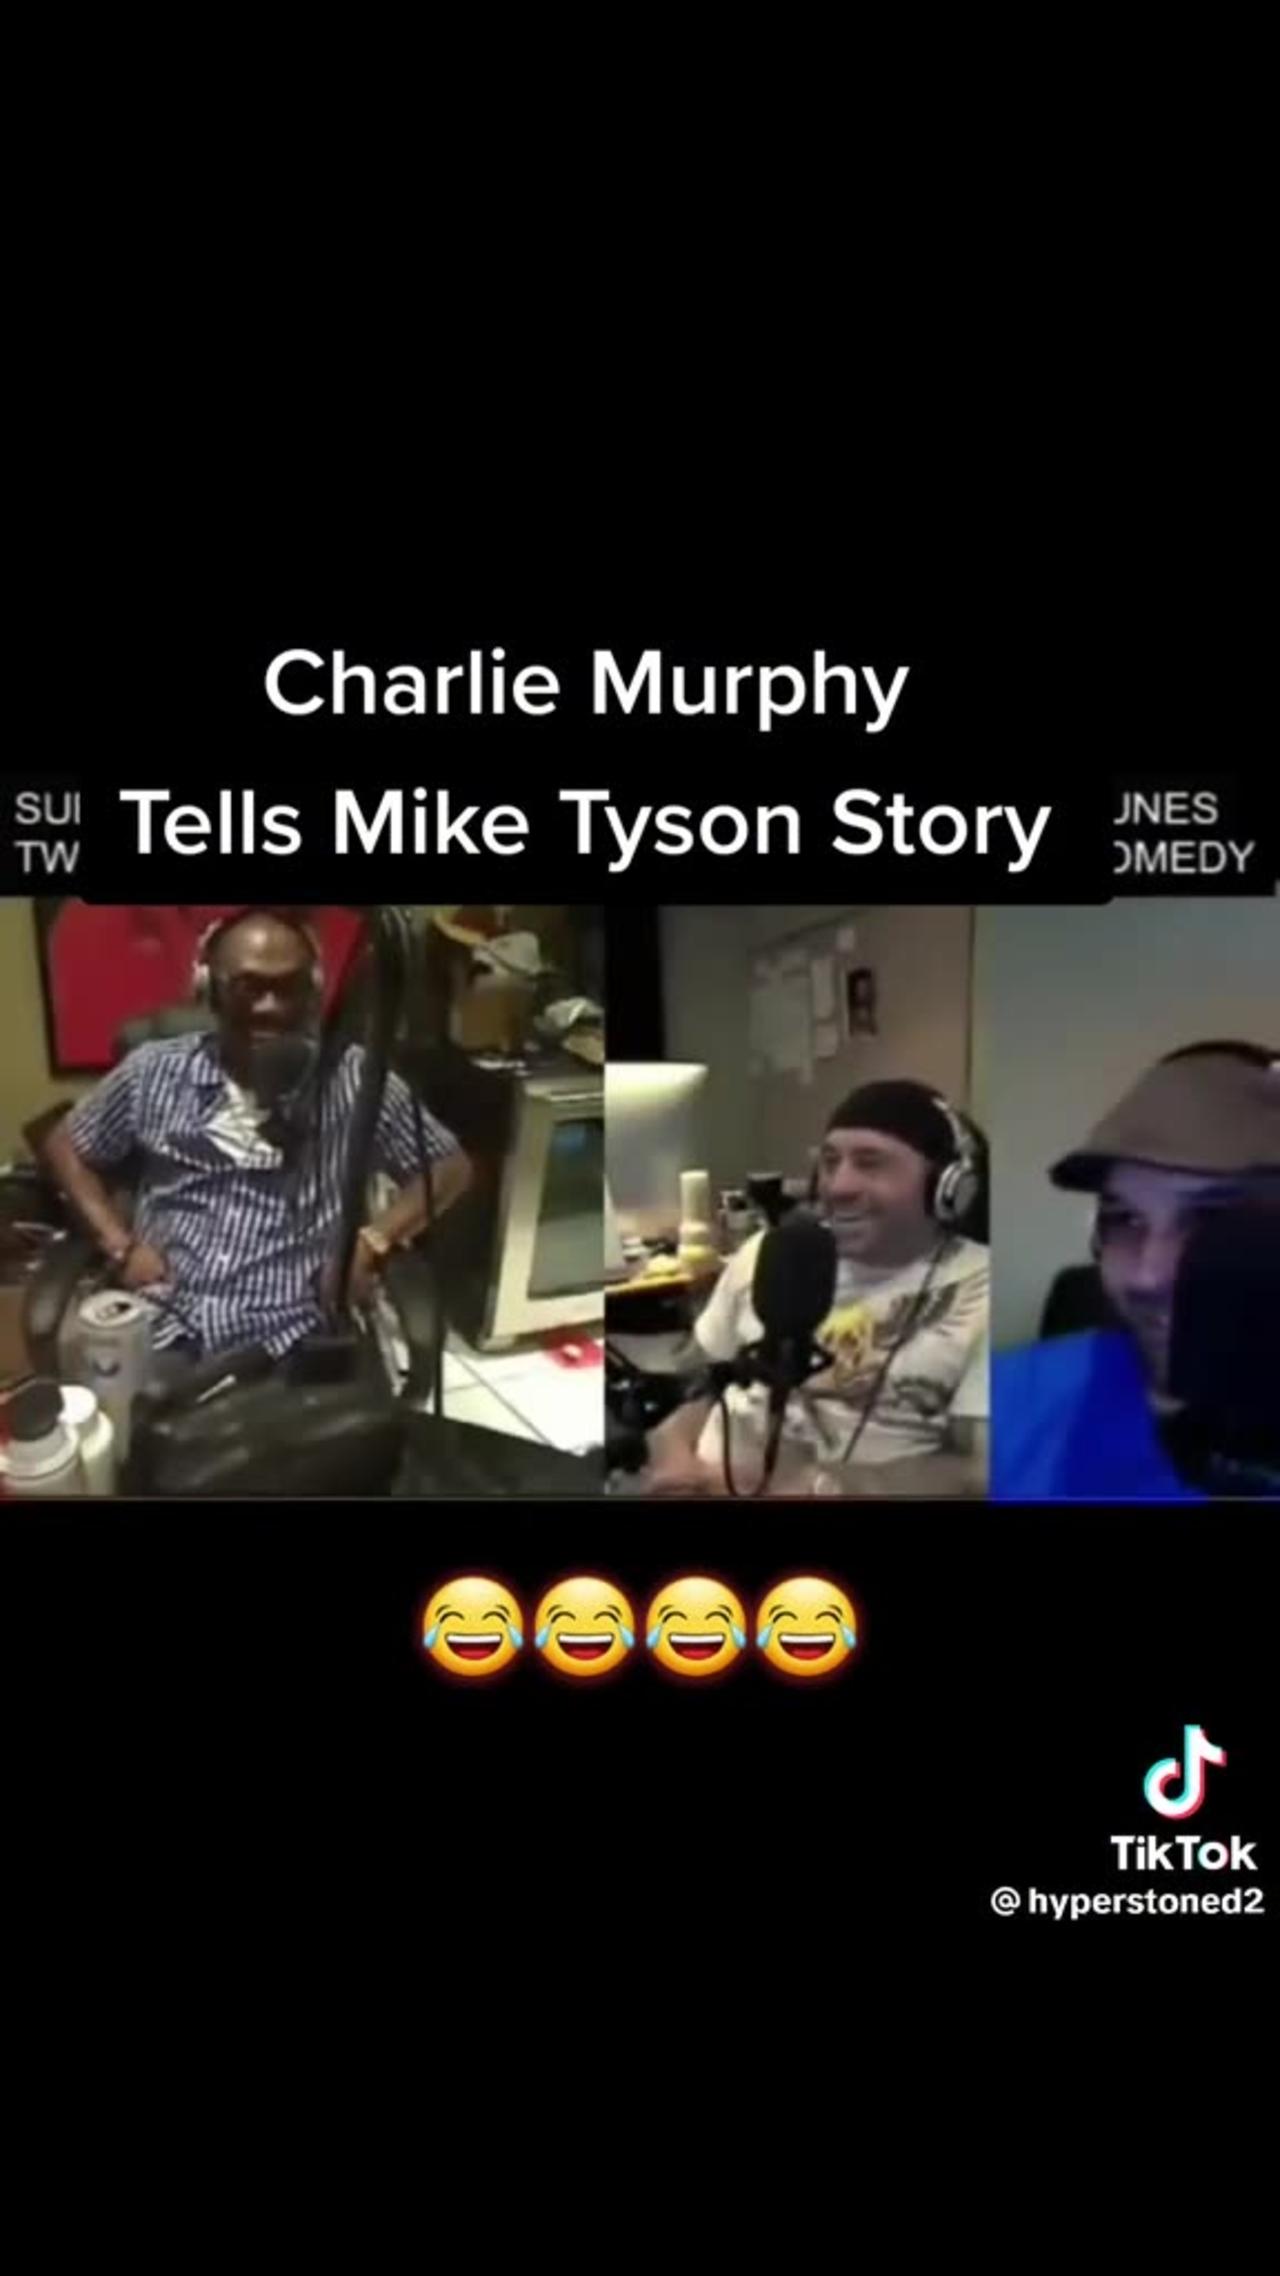 Charlie Murphy tells Mike Tyson story